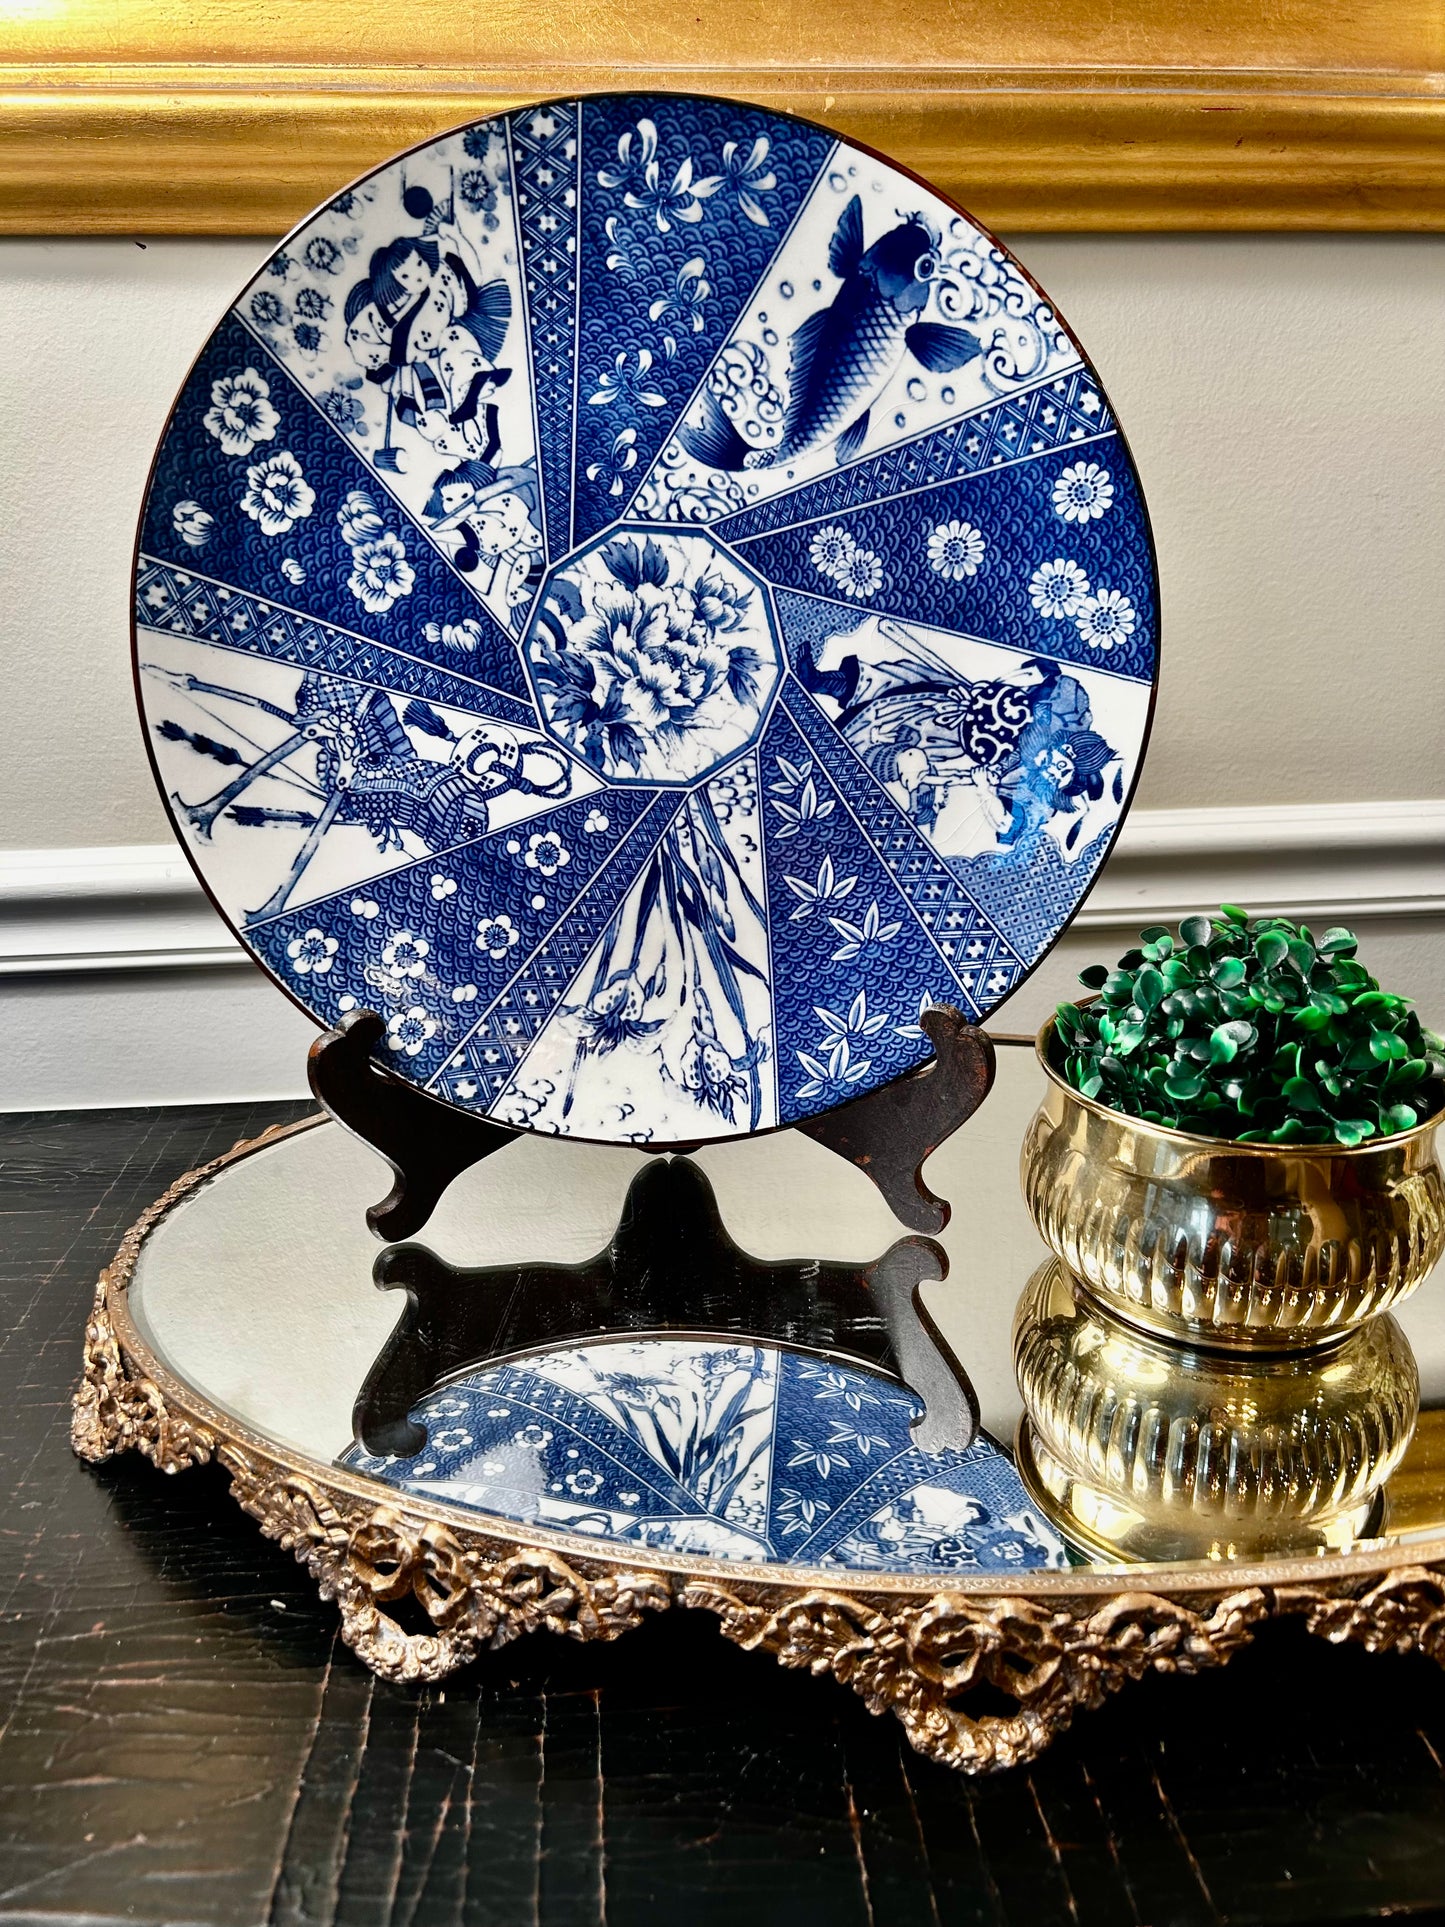 Striking cobalt blue and white chinoiserie round platter